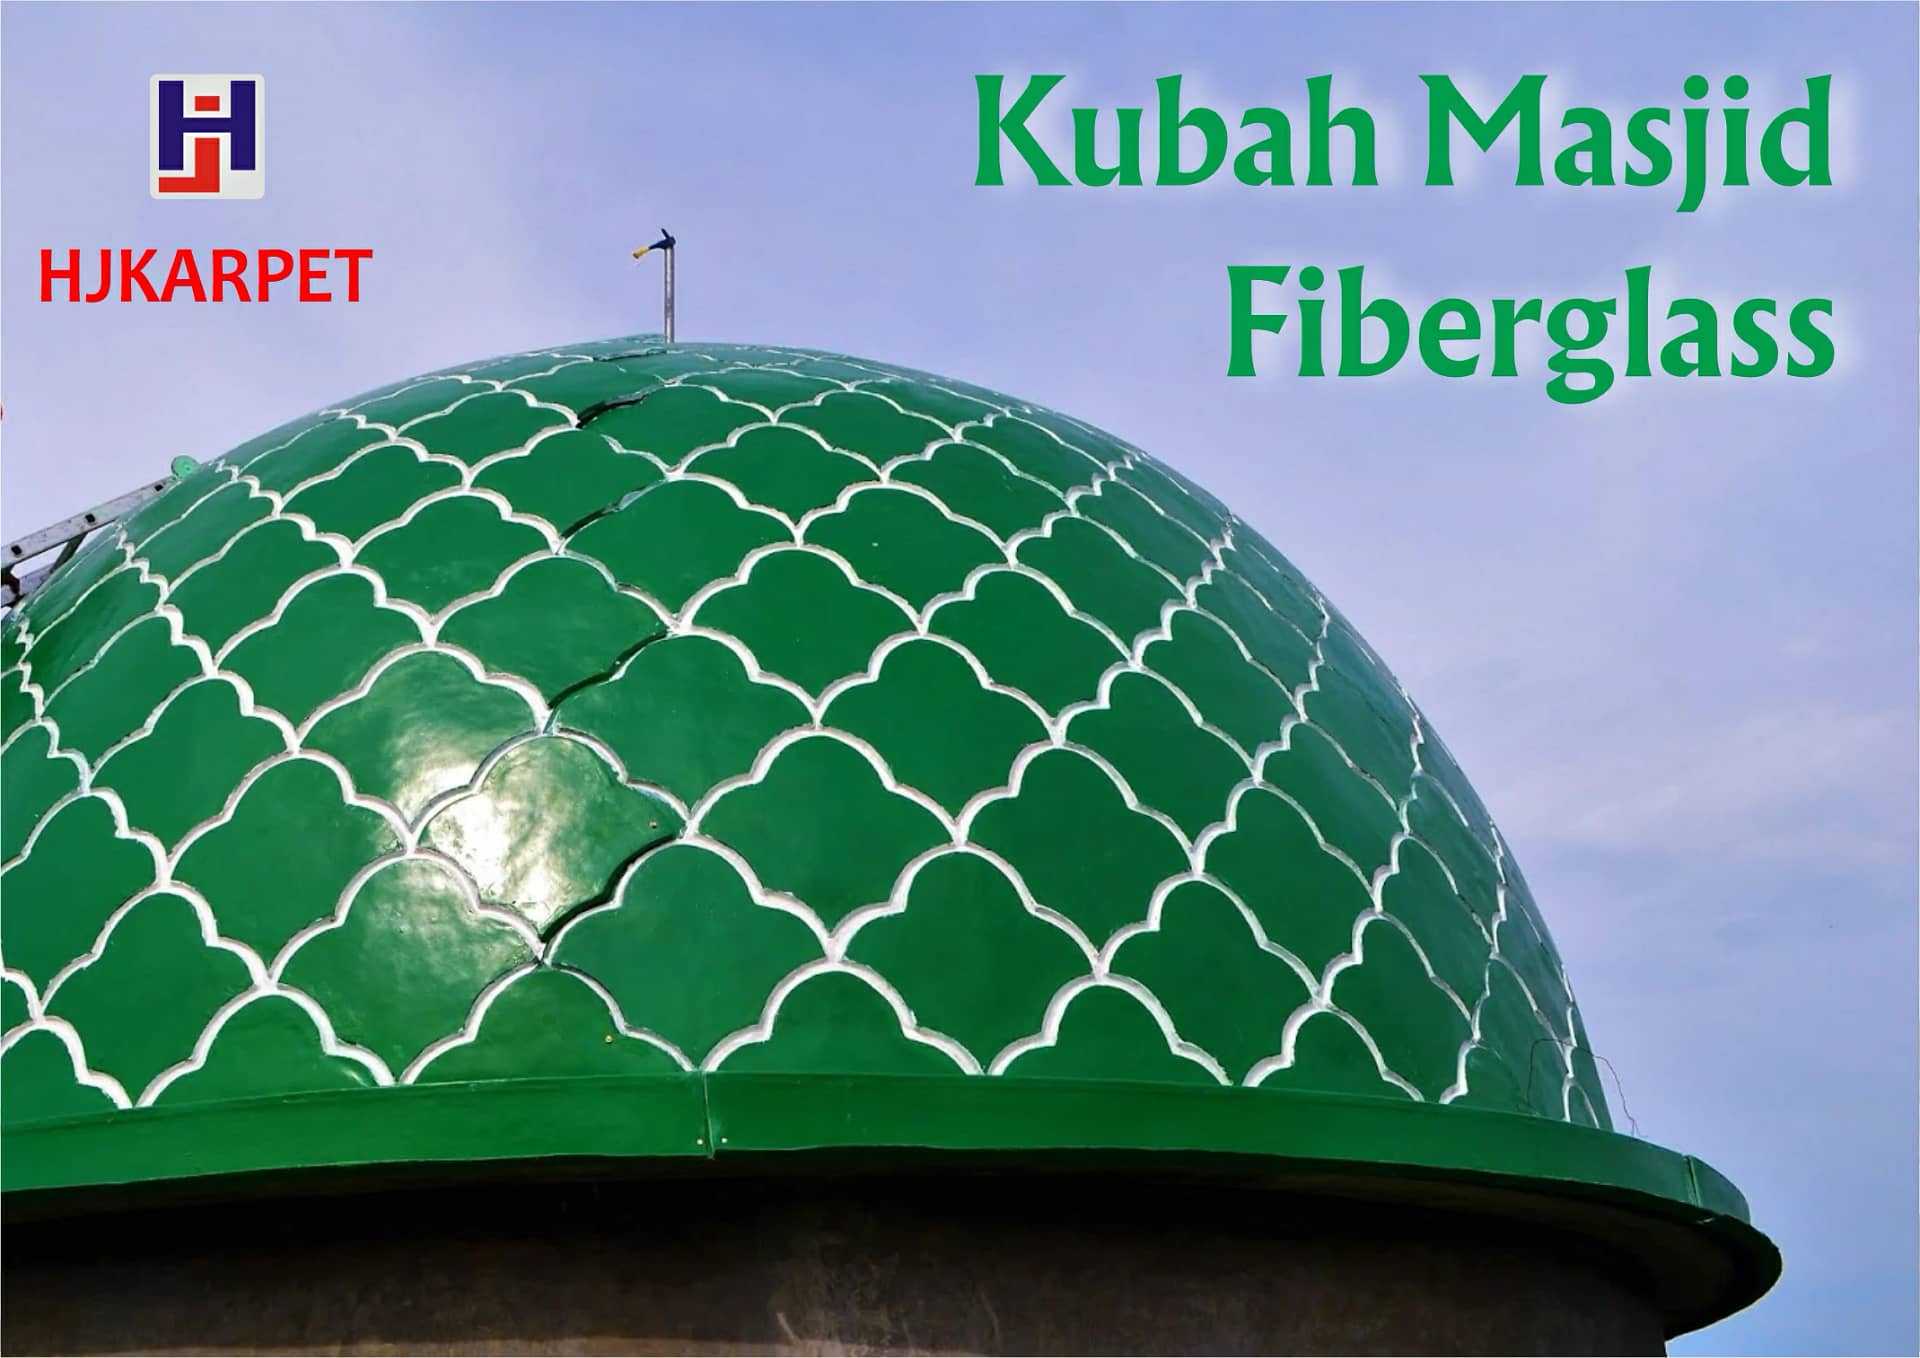 kubah masjid fiberglass